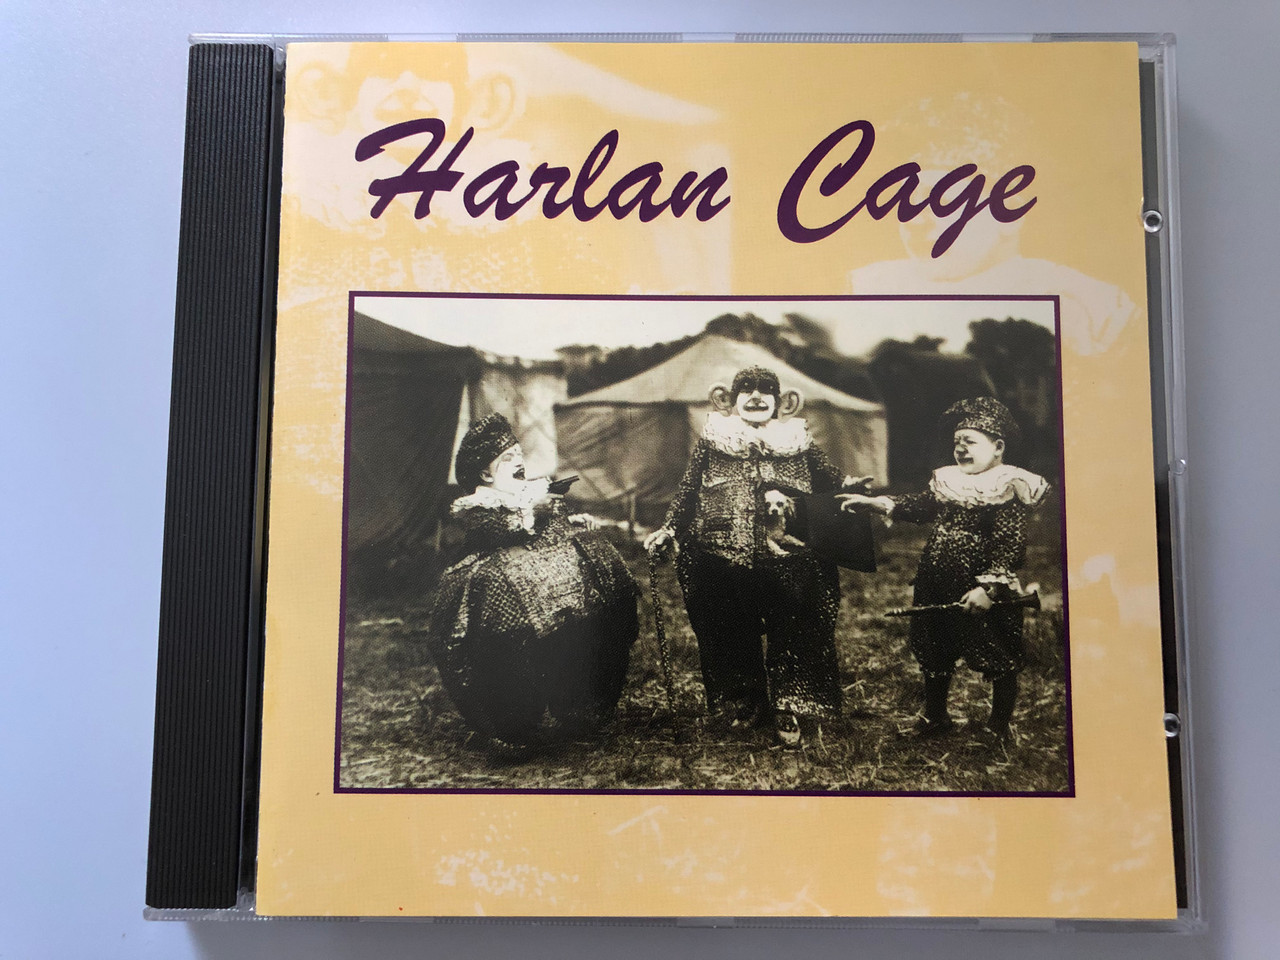 Harlan Cage ‎/ MTM Music ‎Audio CD 1996 / 19965 - bibleinmylanguage